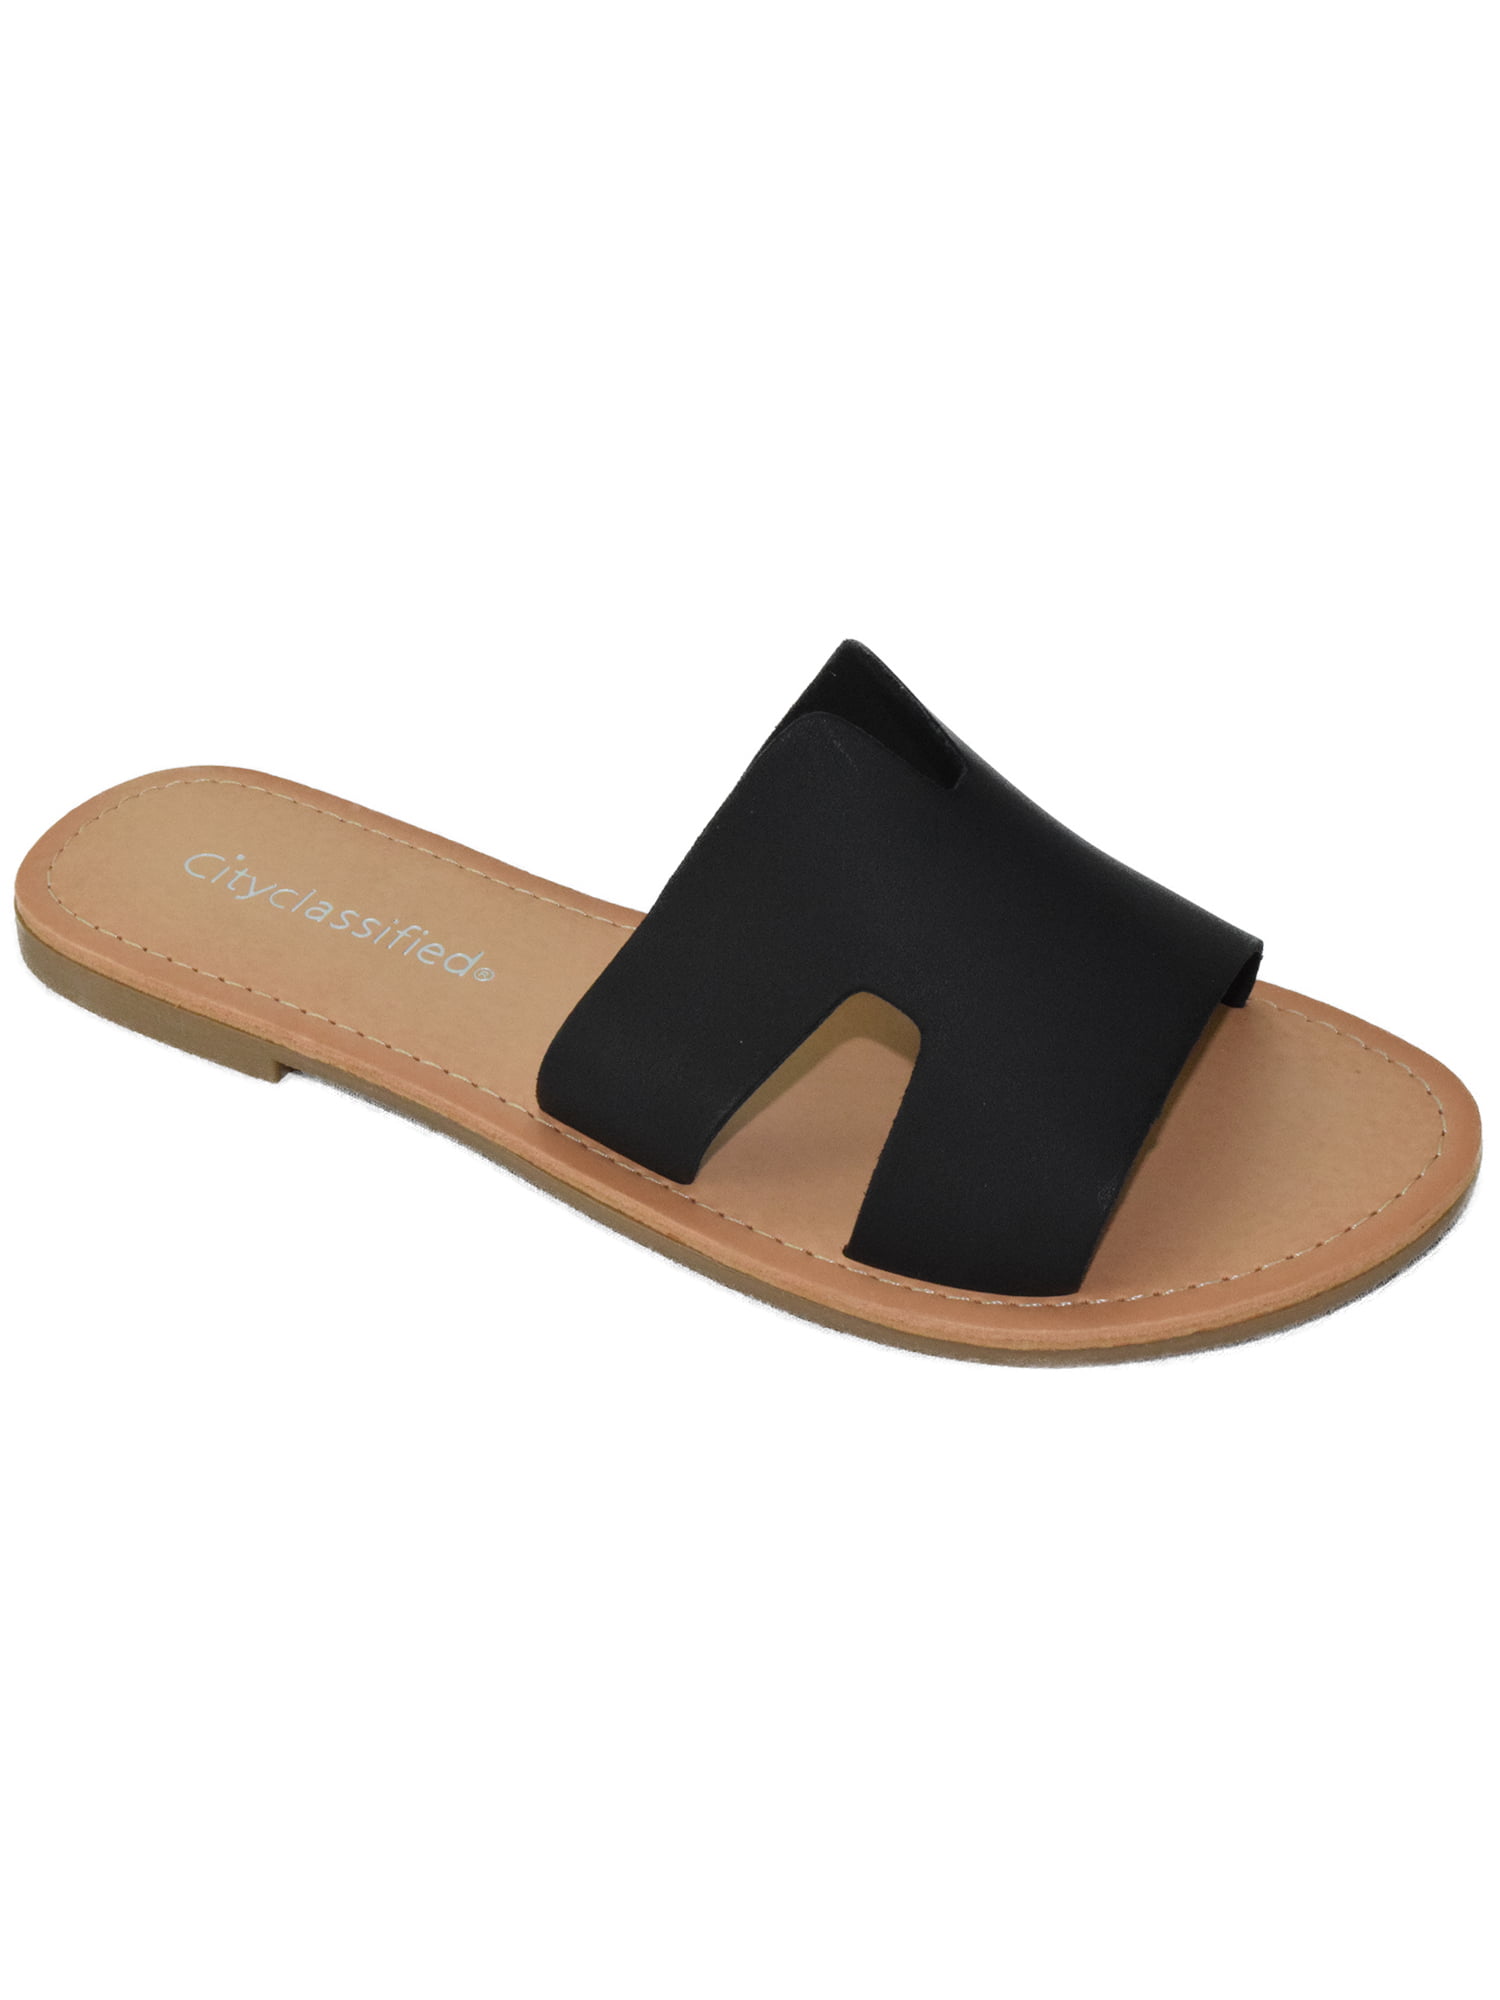 Flat Sandals Women Hot Fashion Open Toe Flip Flops Slides Slip On Beach Shoes,Black,6.5